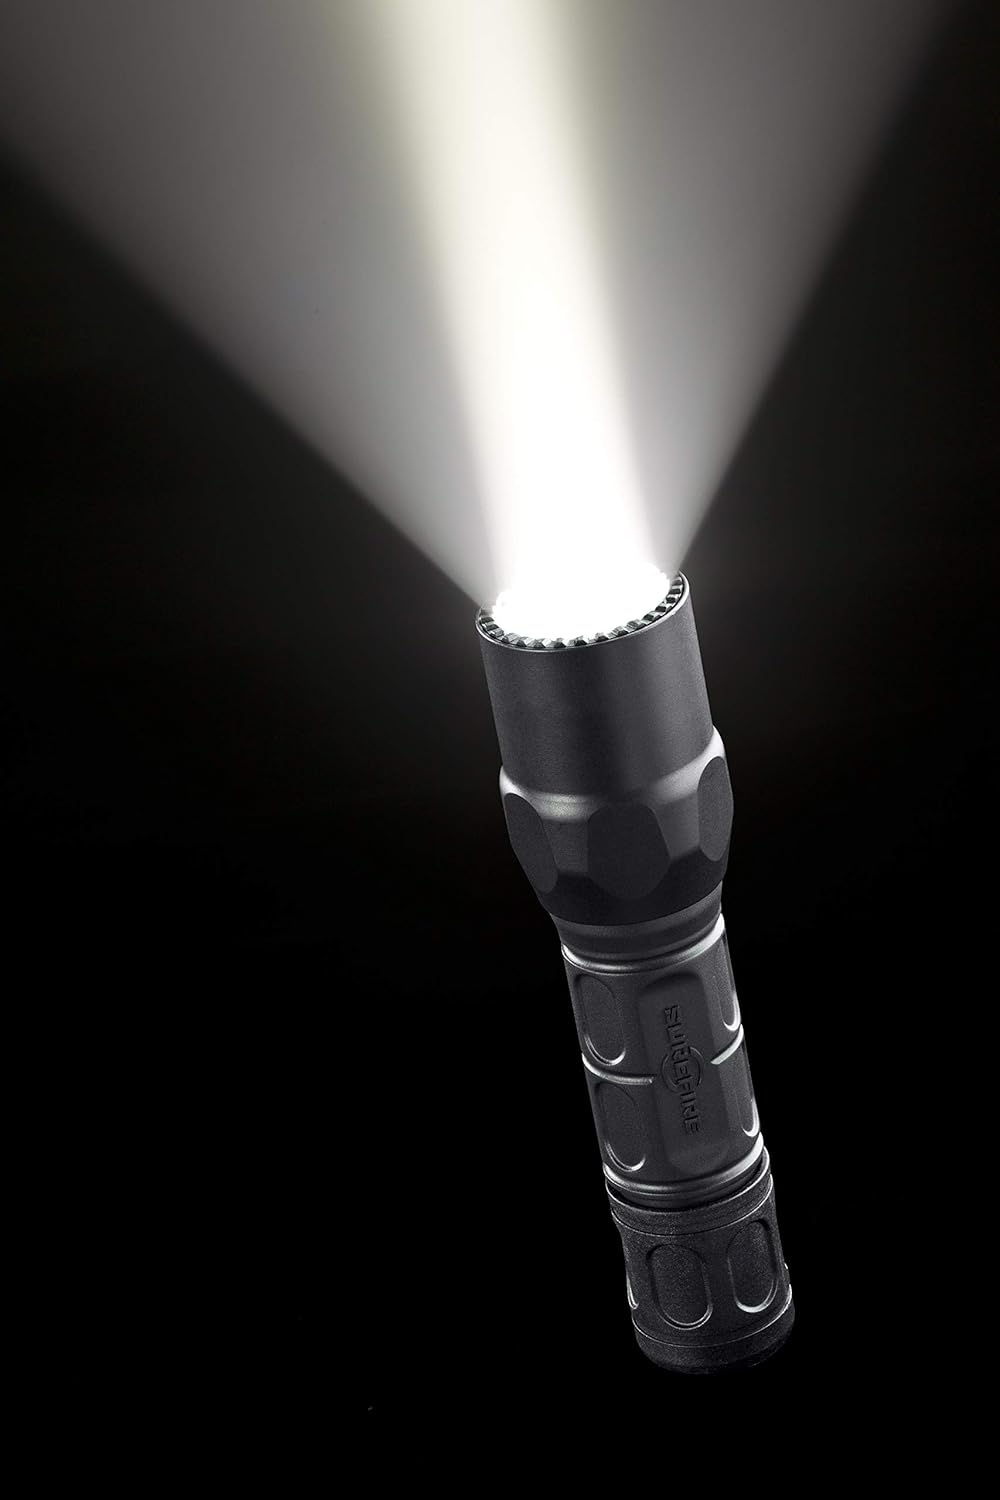 SureFire G2X Series LED Flashlights with Lumen Upgrade and Tough Nitrolon Body